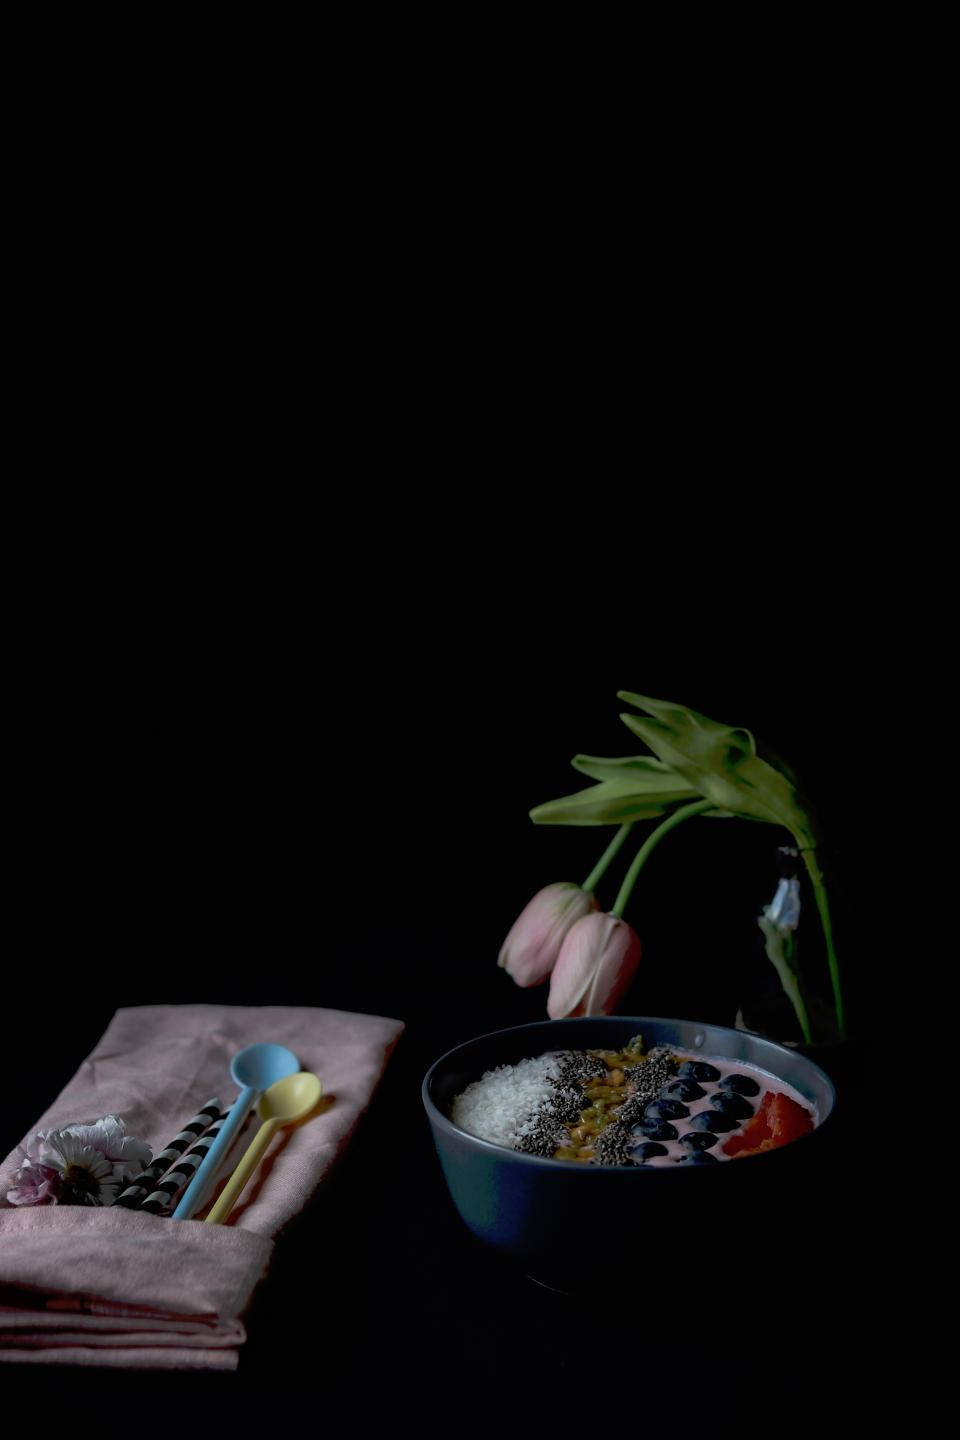 Acai Bowl With Fruits On Dark Background Background